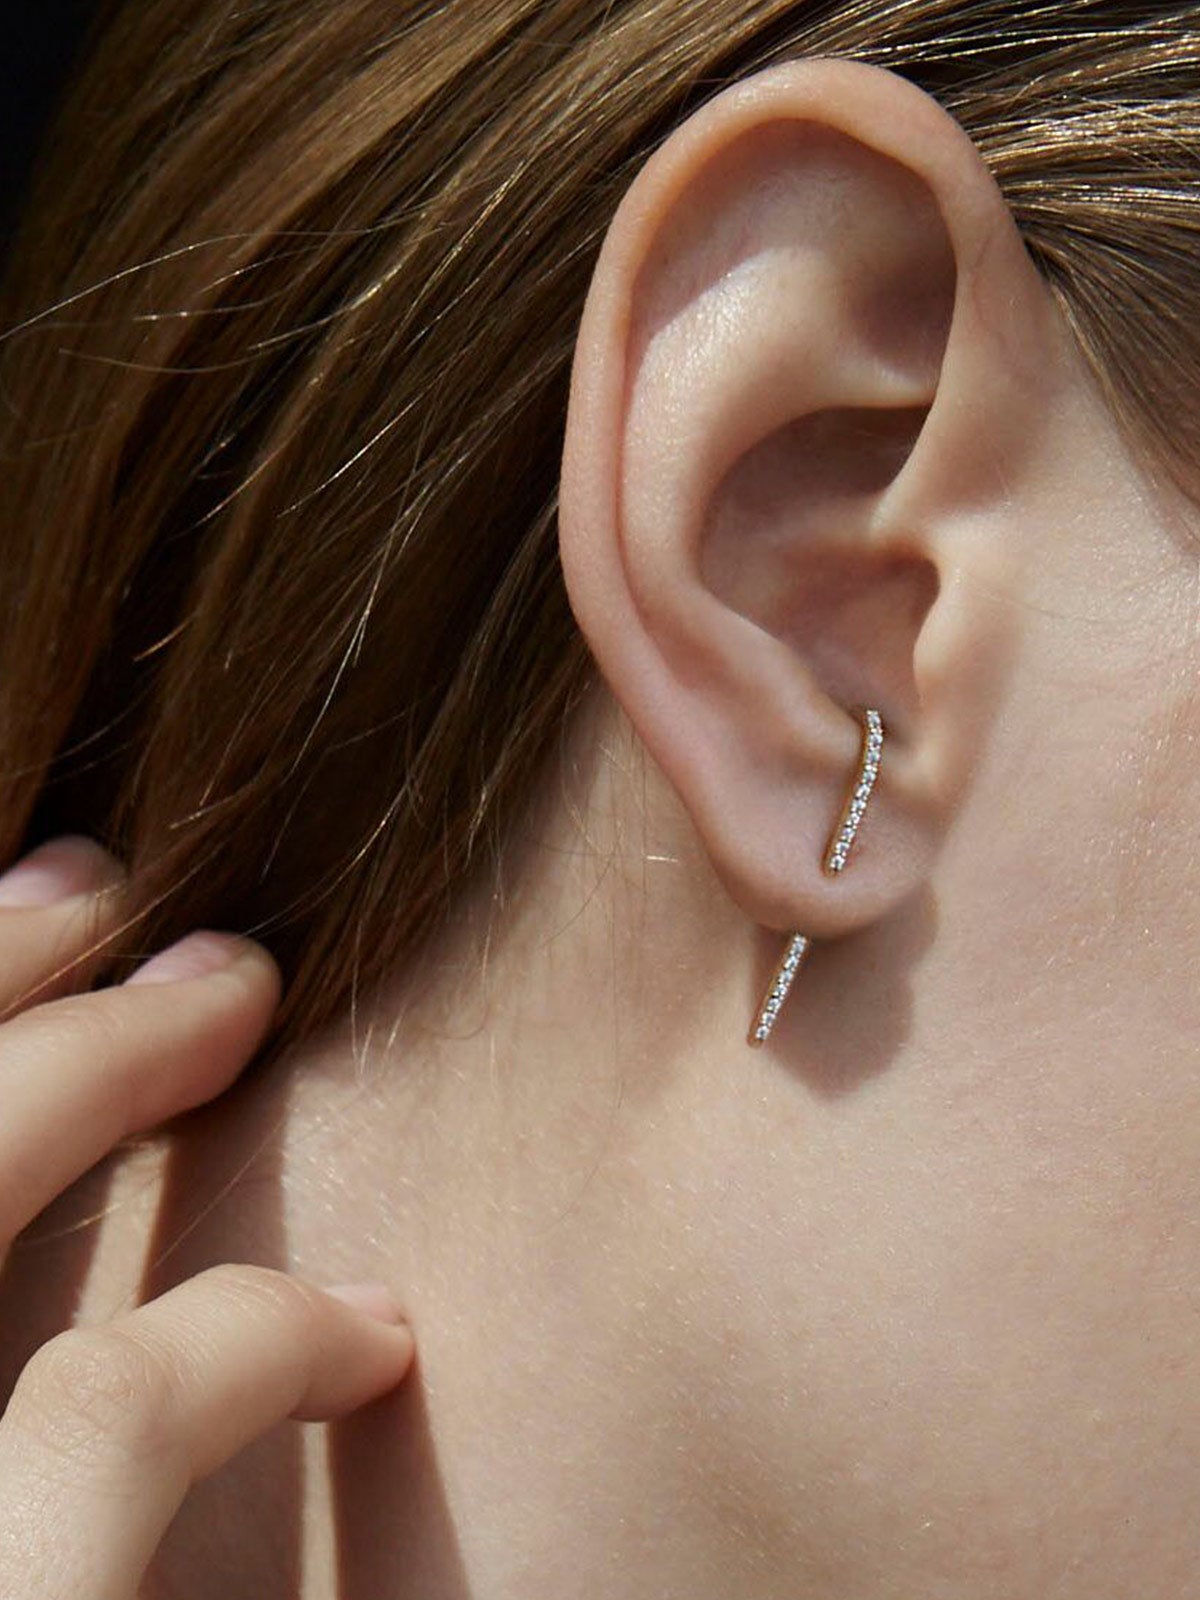 The Petite Ear Pin The Petite Ear Pin - Fashionkind